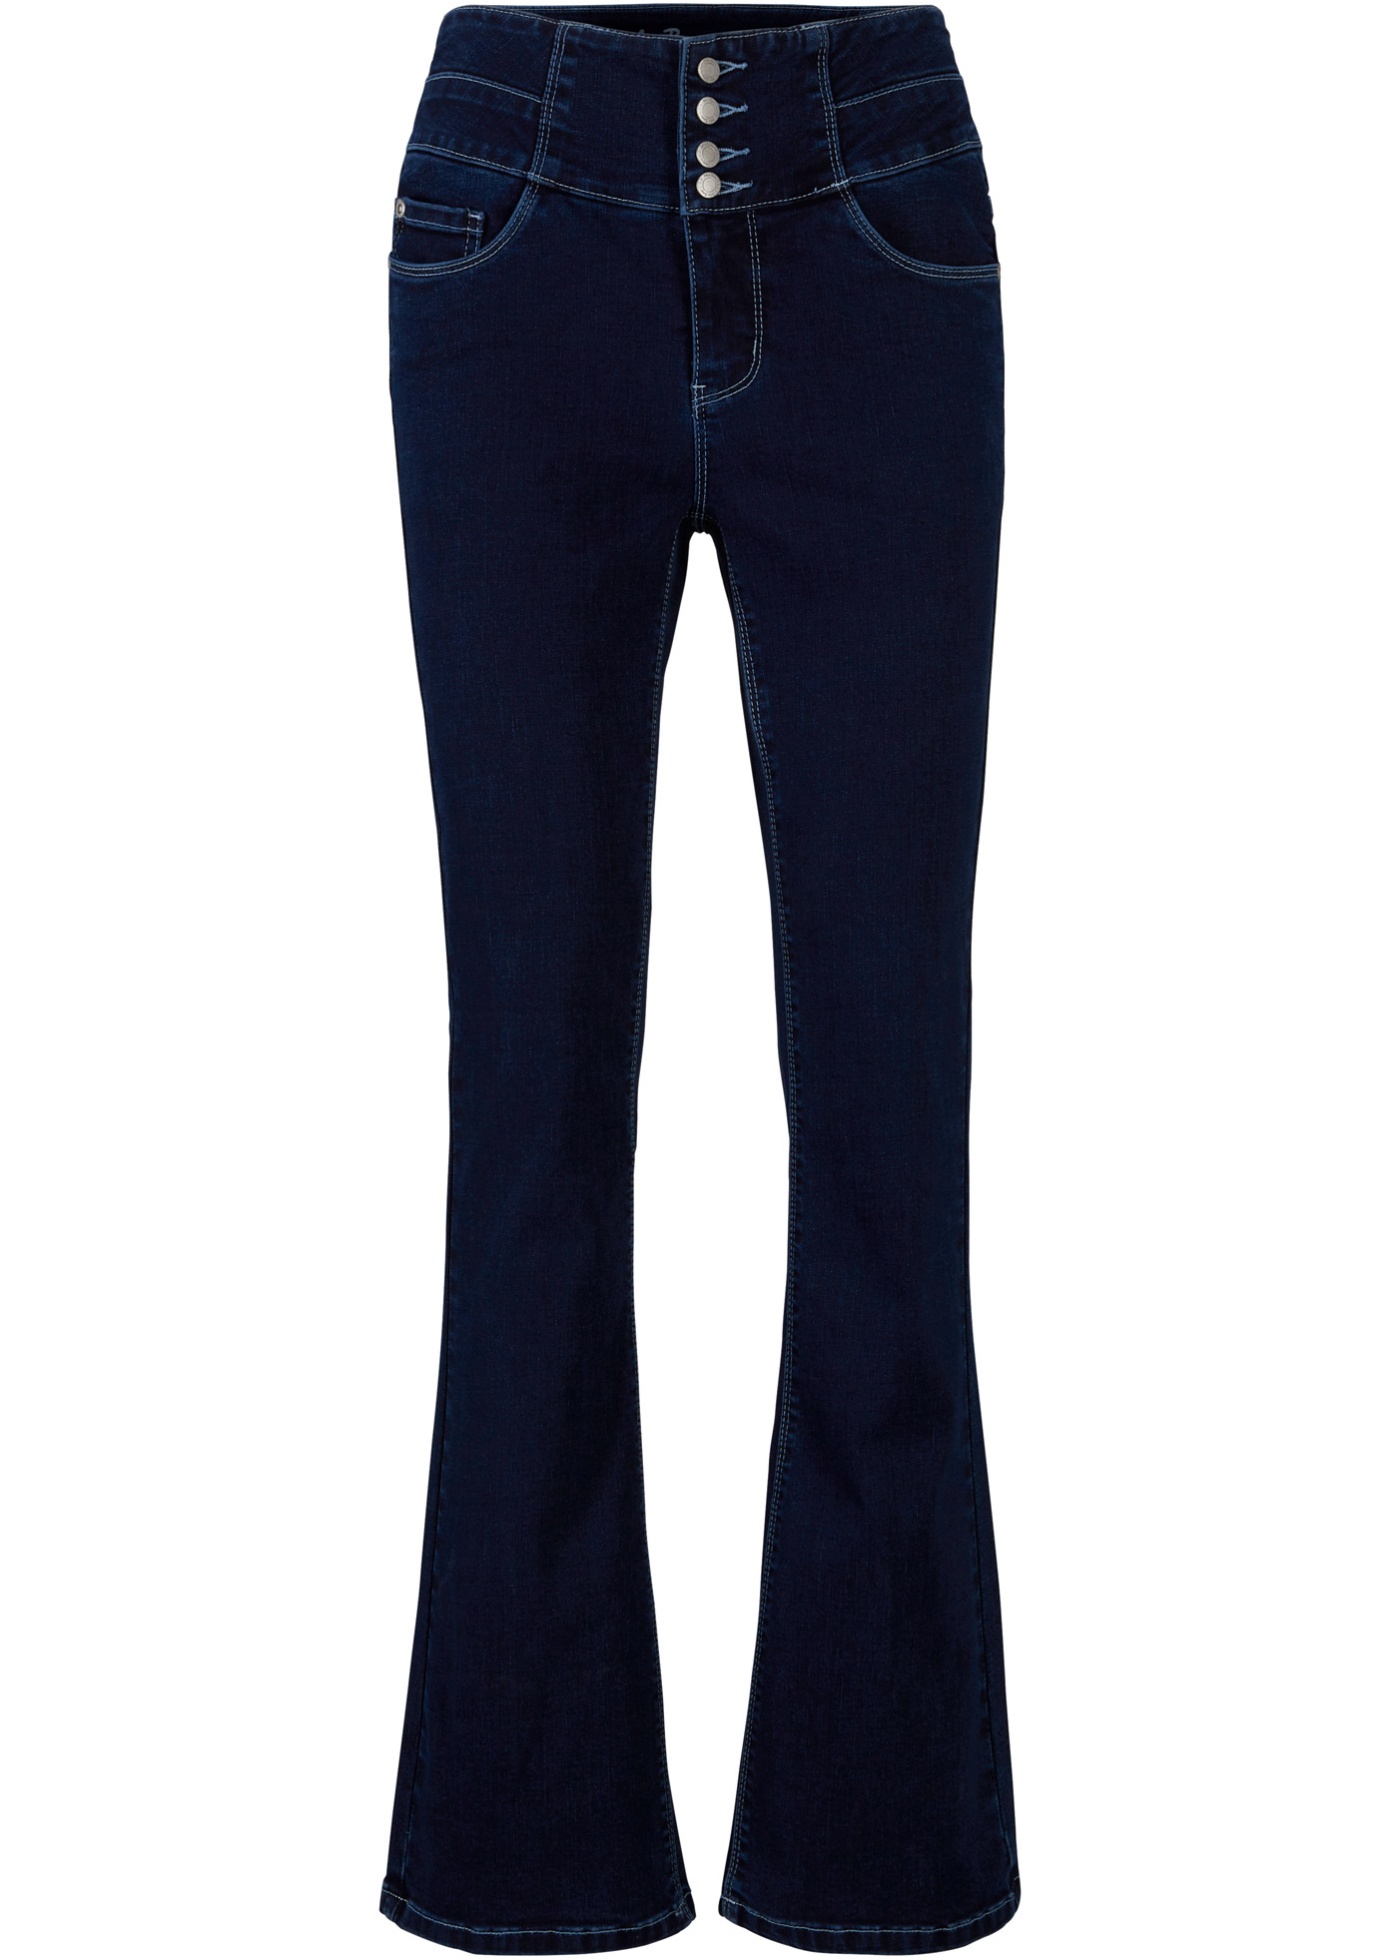 Corrigerende stretch jeans met hoge band, bootcut